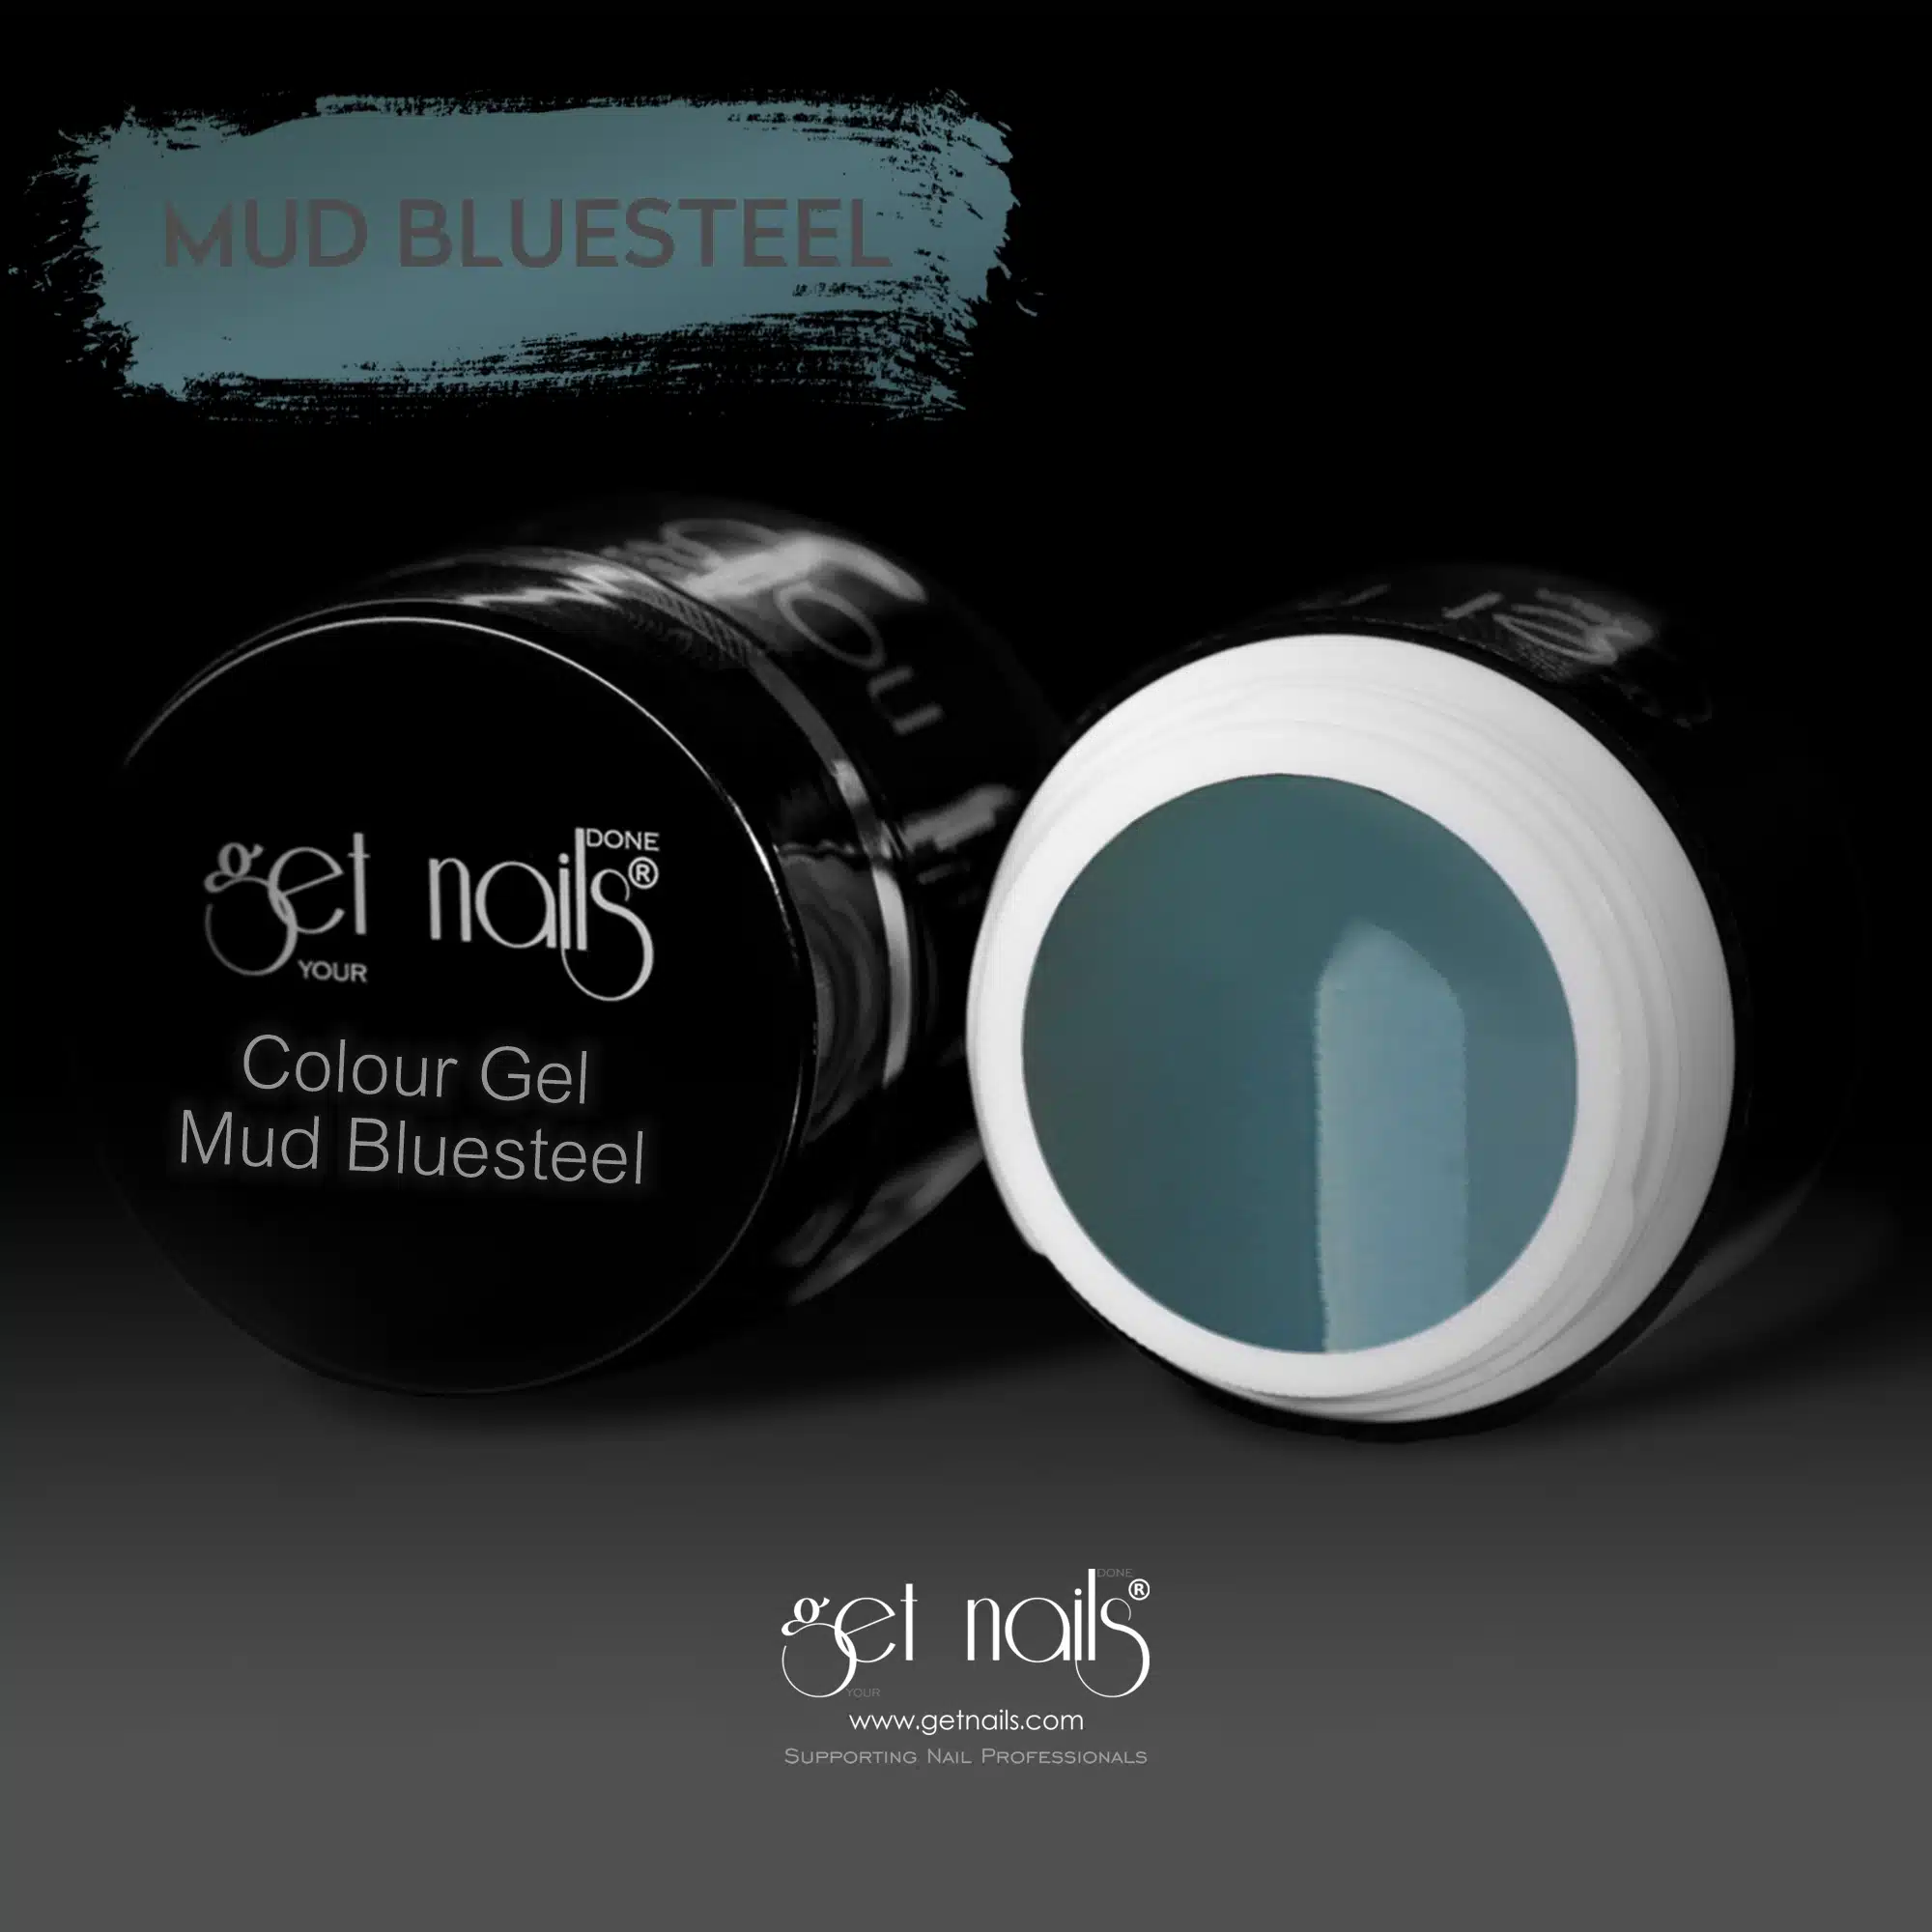 Get Nails Austria - Colour Gel Mud Bluesteel 5g